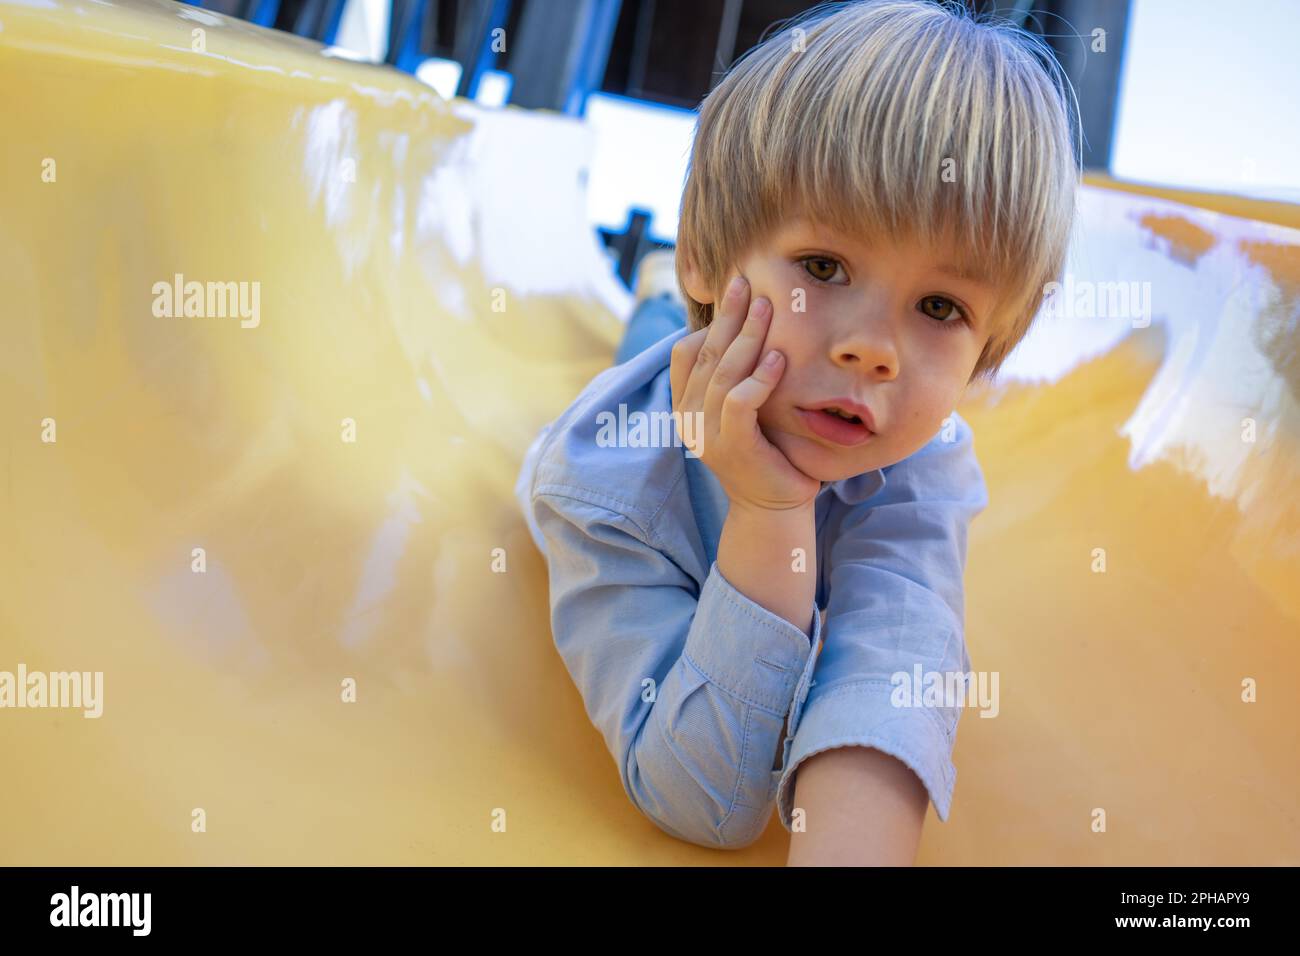 https://c8.alamy.com/comp/2PHAPY9/adorable-little-3-4-year-old-toddler-boy-having-fun-on-playground-child-boy-2PHAPY9.jpg